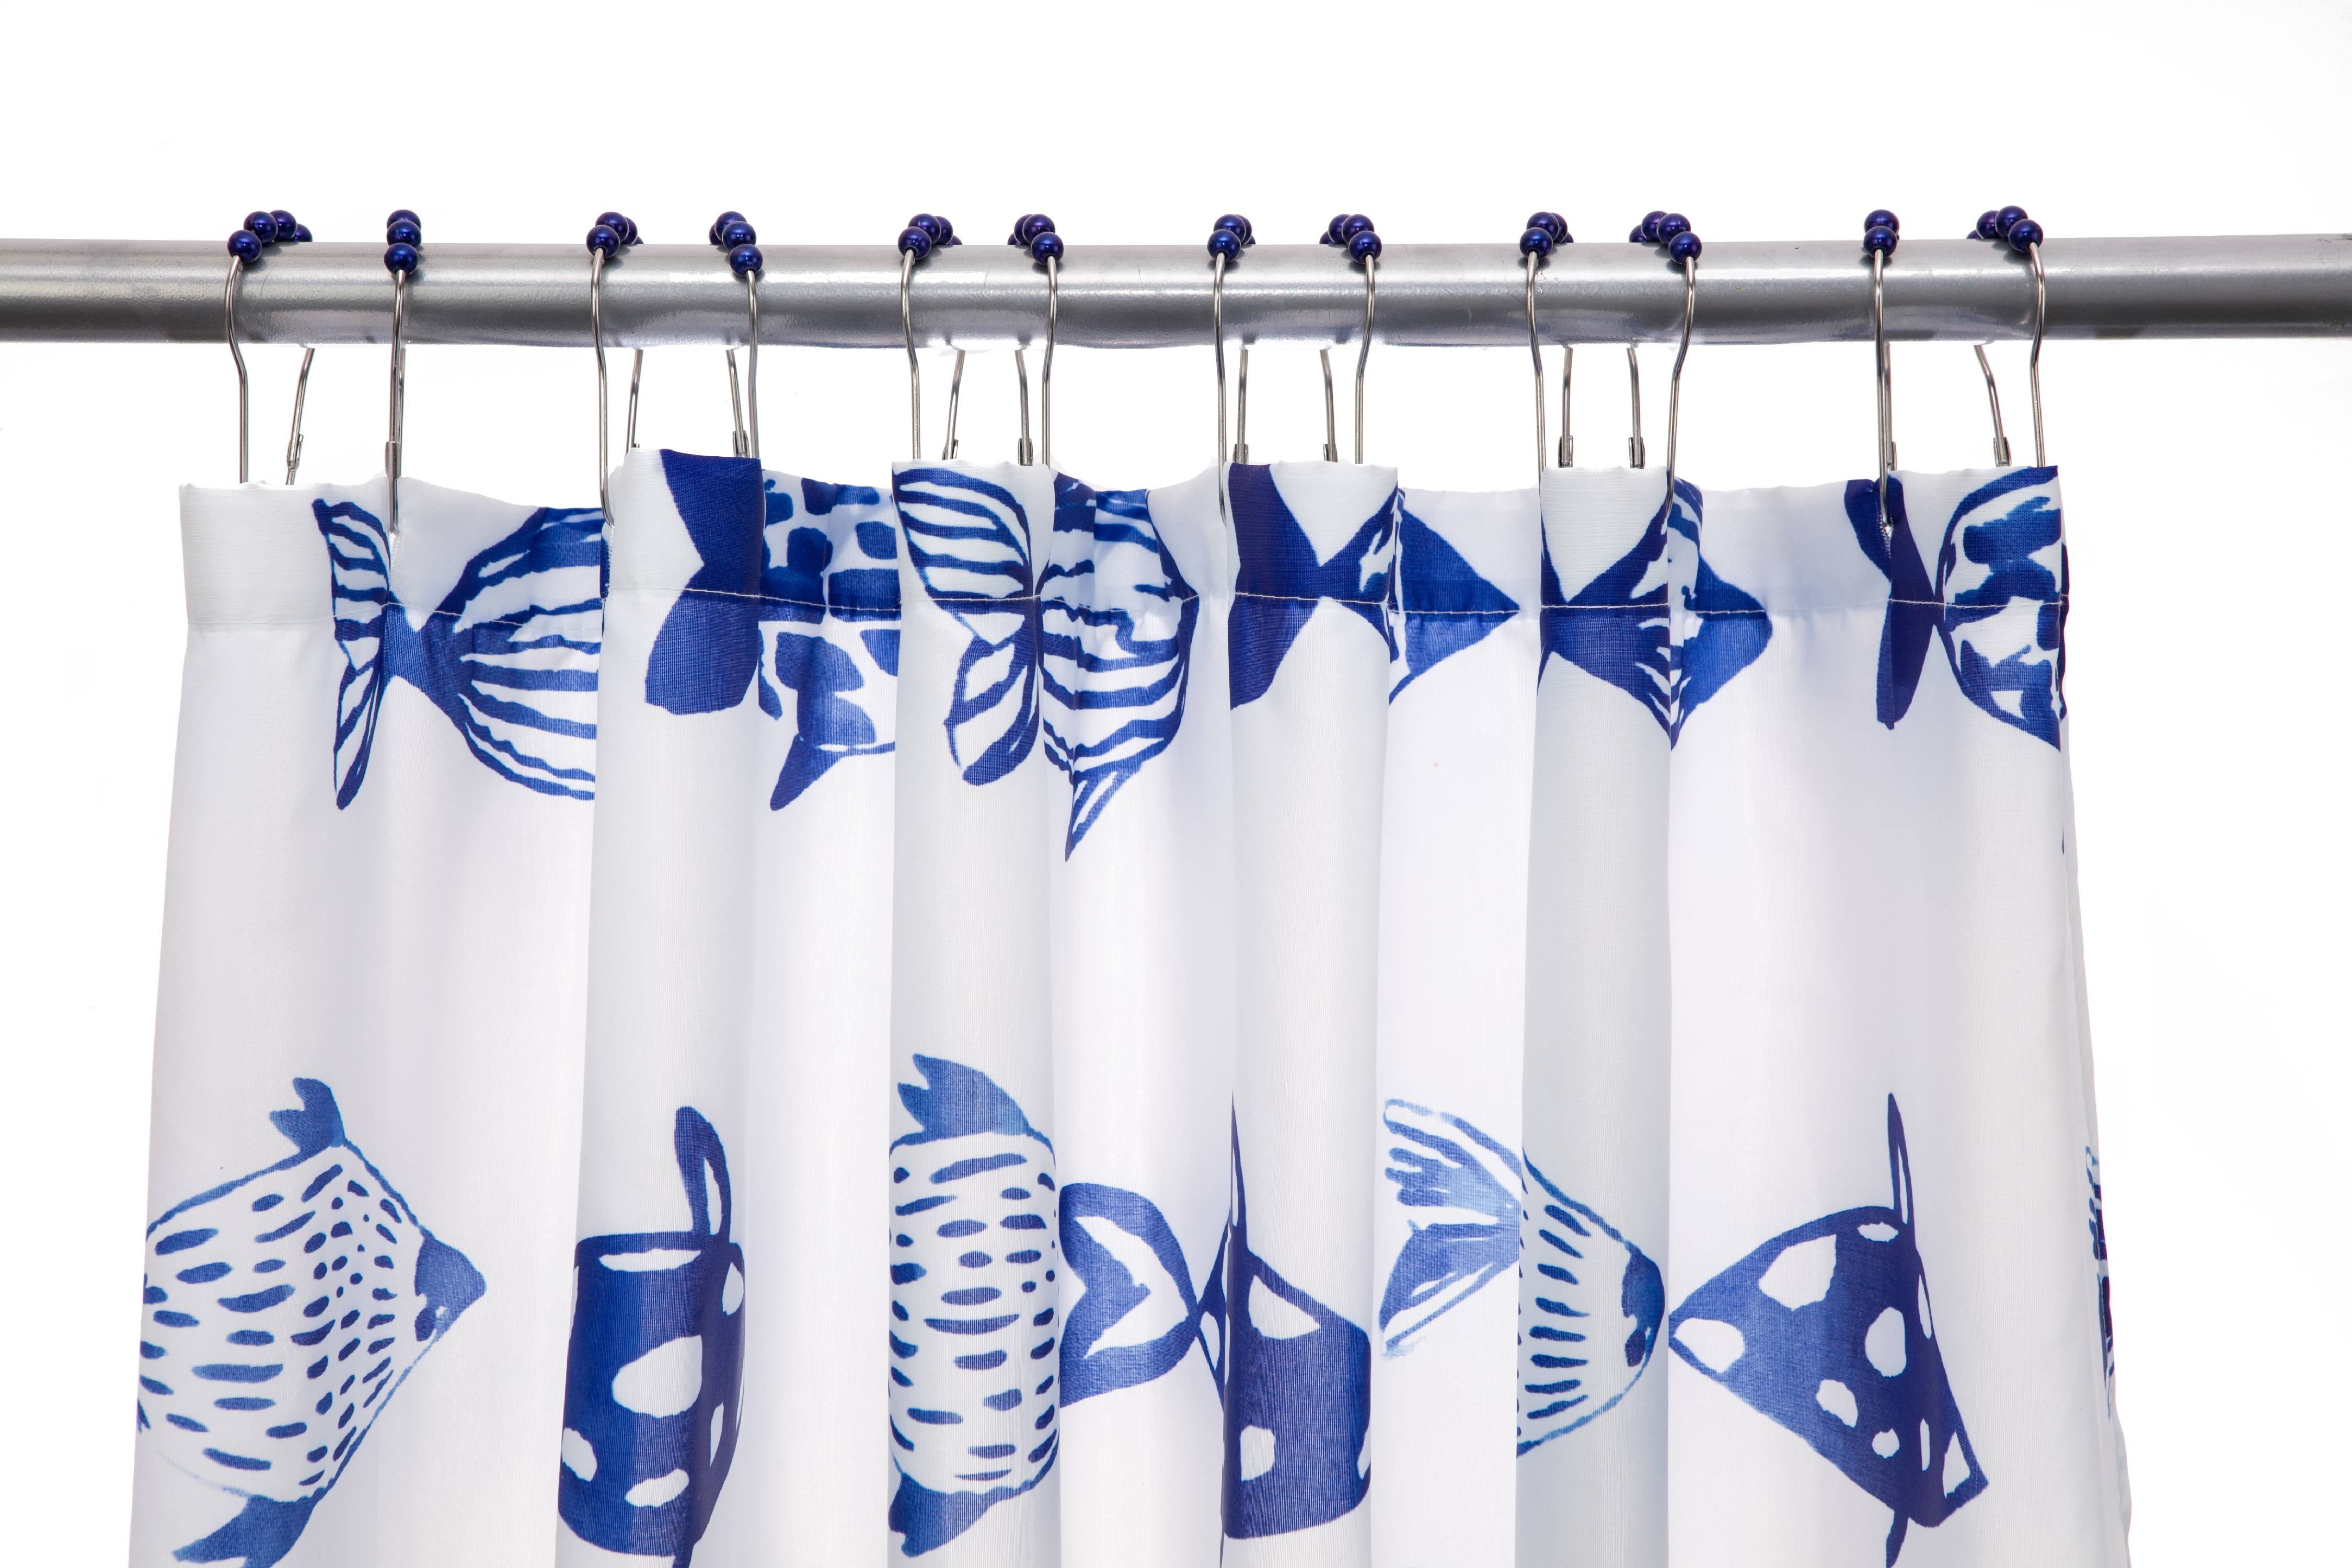 Fruit salad Shower Curtain Bathroom Decor Waterproof Fabric & 12Hooks 71*71inch 